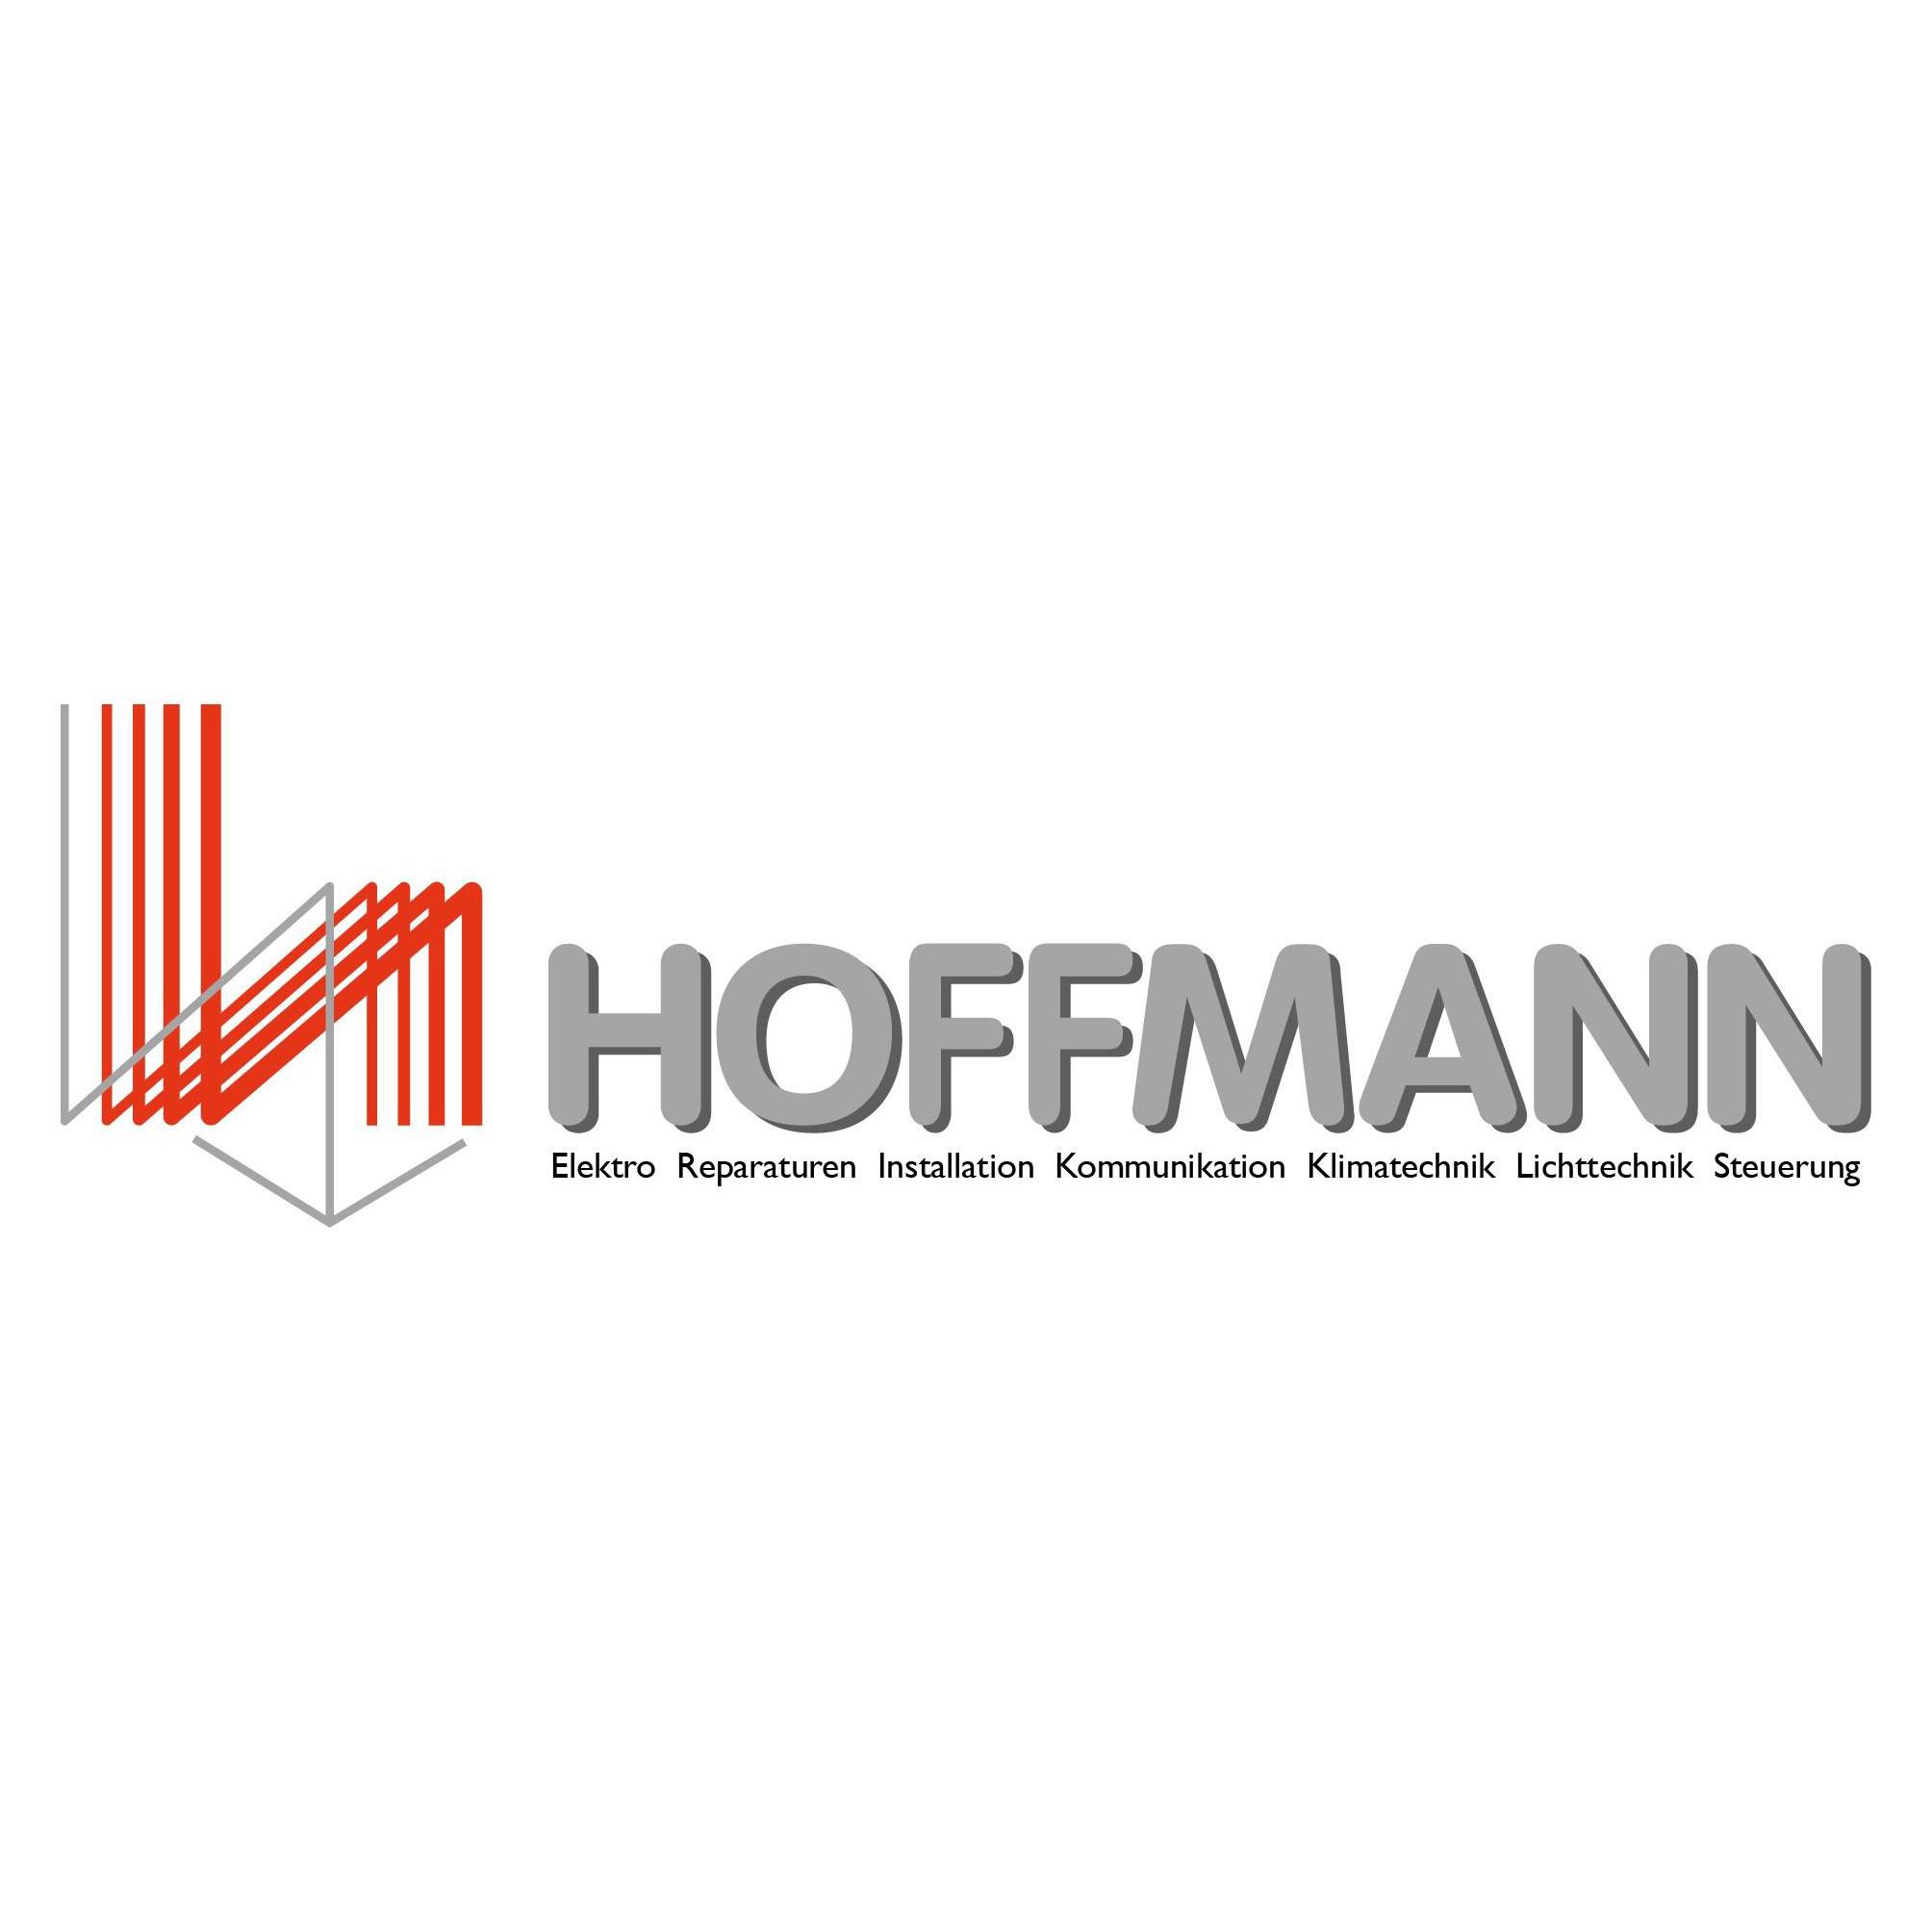 Hoffmann HRS GmbH & Co. KG in Schweinfurt